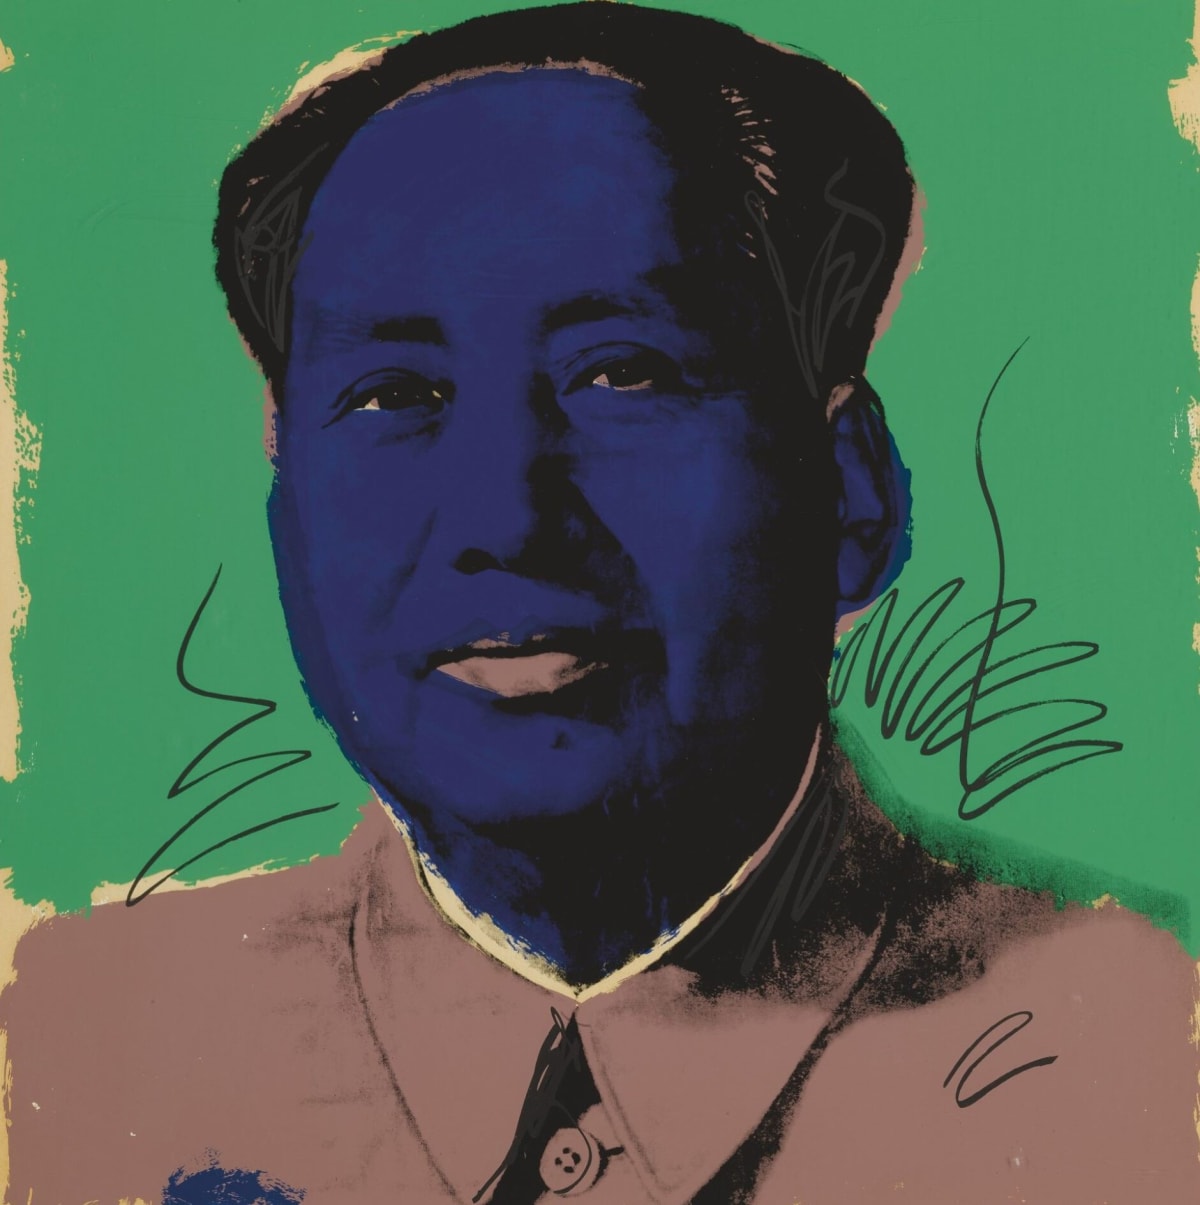 Andy Warhol Chairman Mao Portfolio For sale (F & S II.90 - 99)